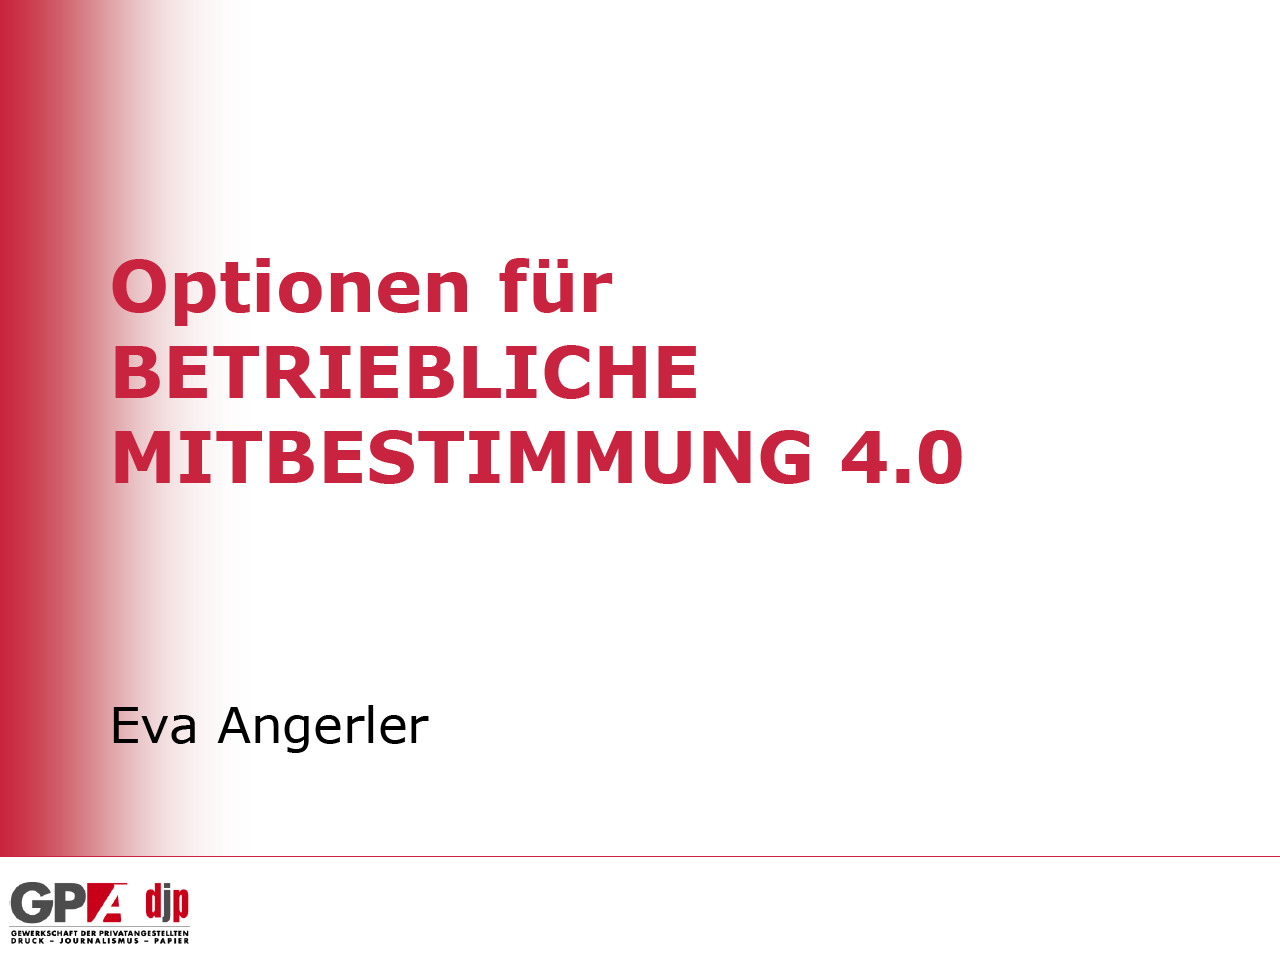 Eva Angerler (GPA-djp): Mitbestimmung 4.0